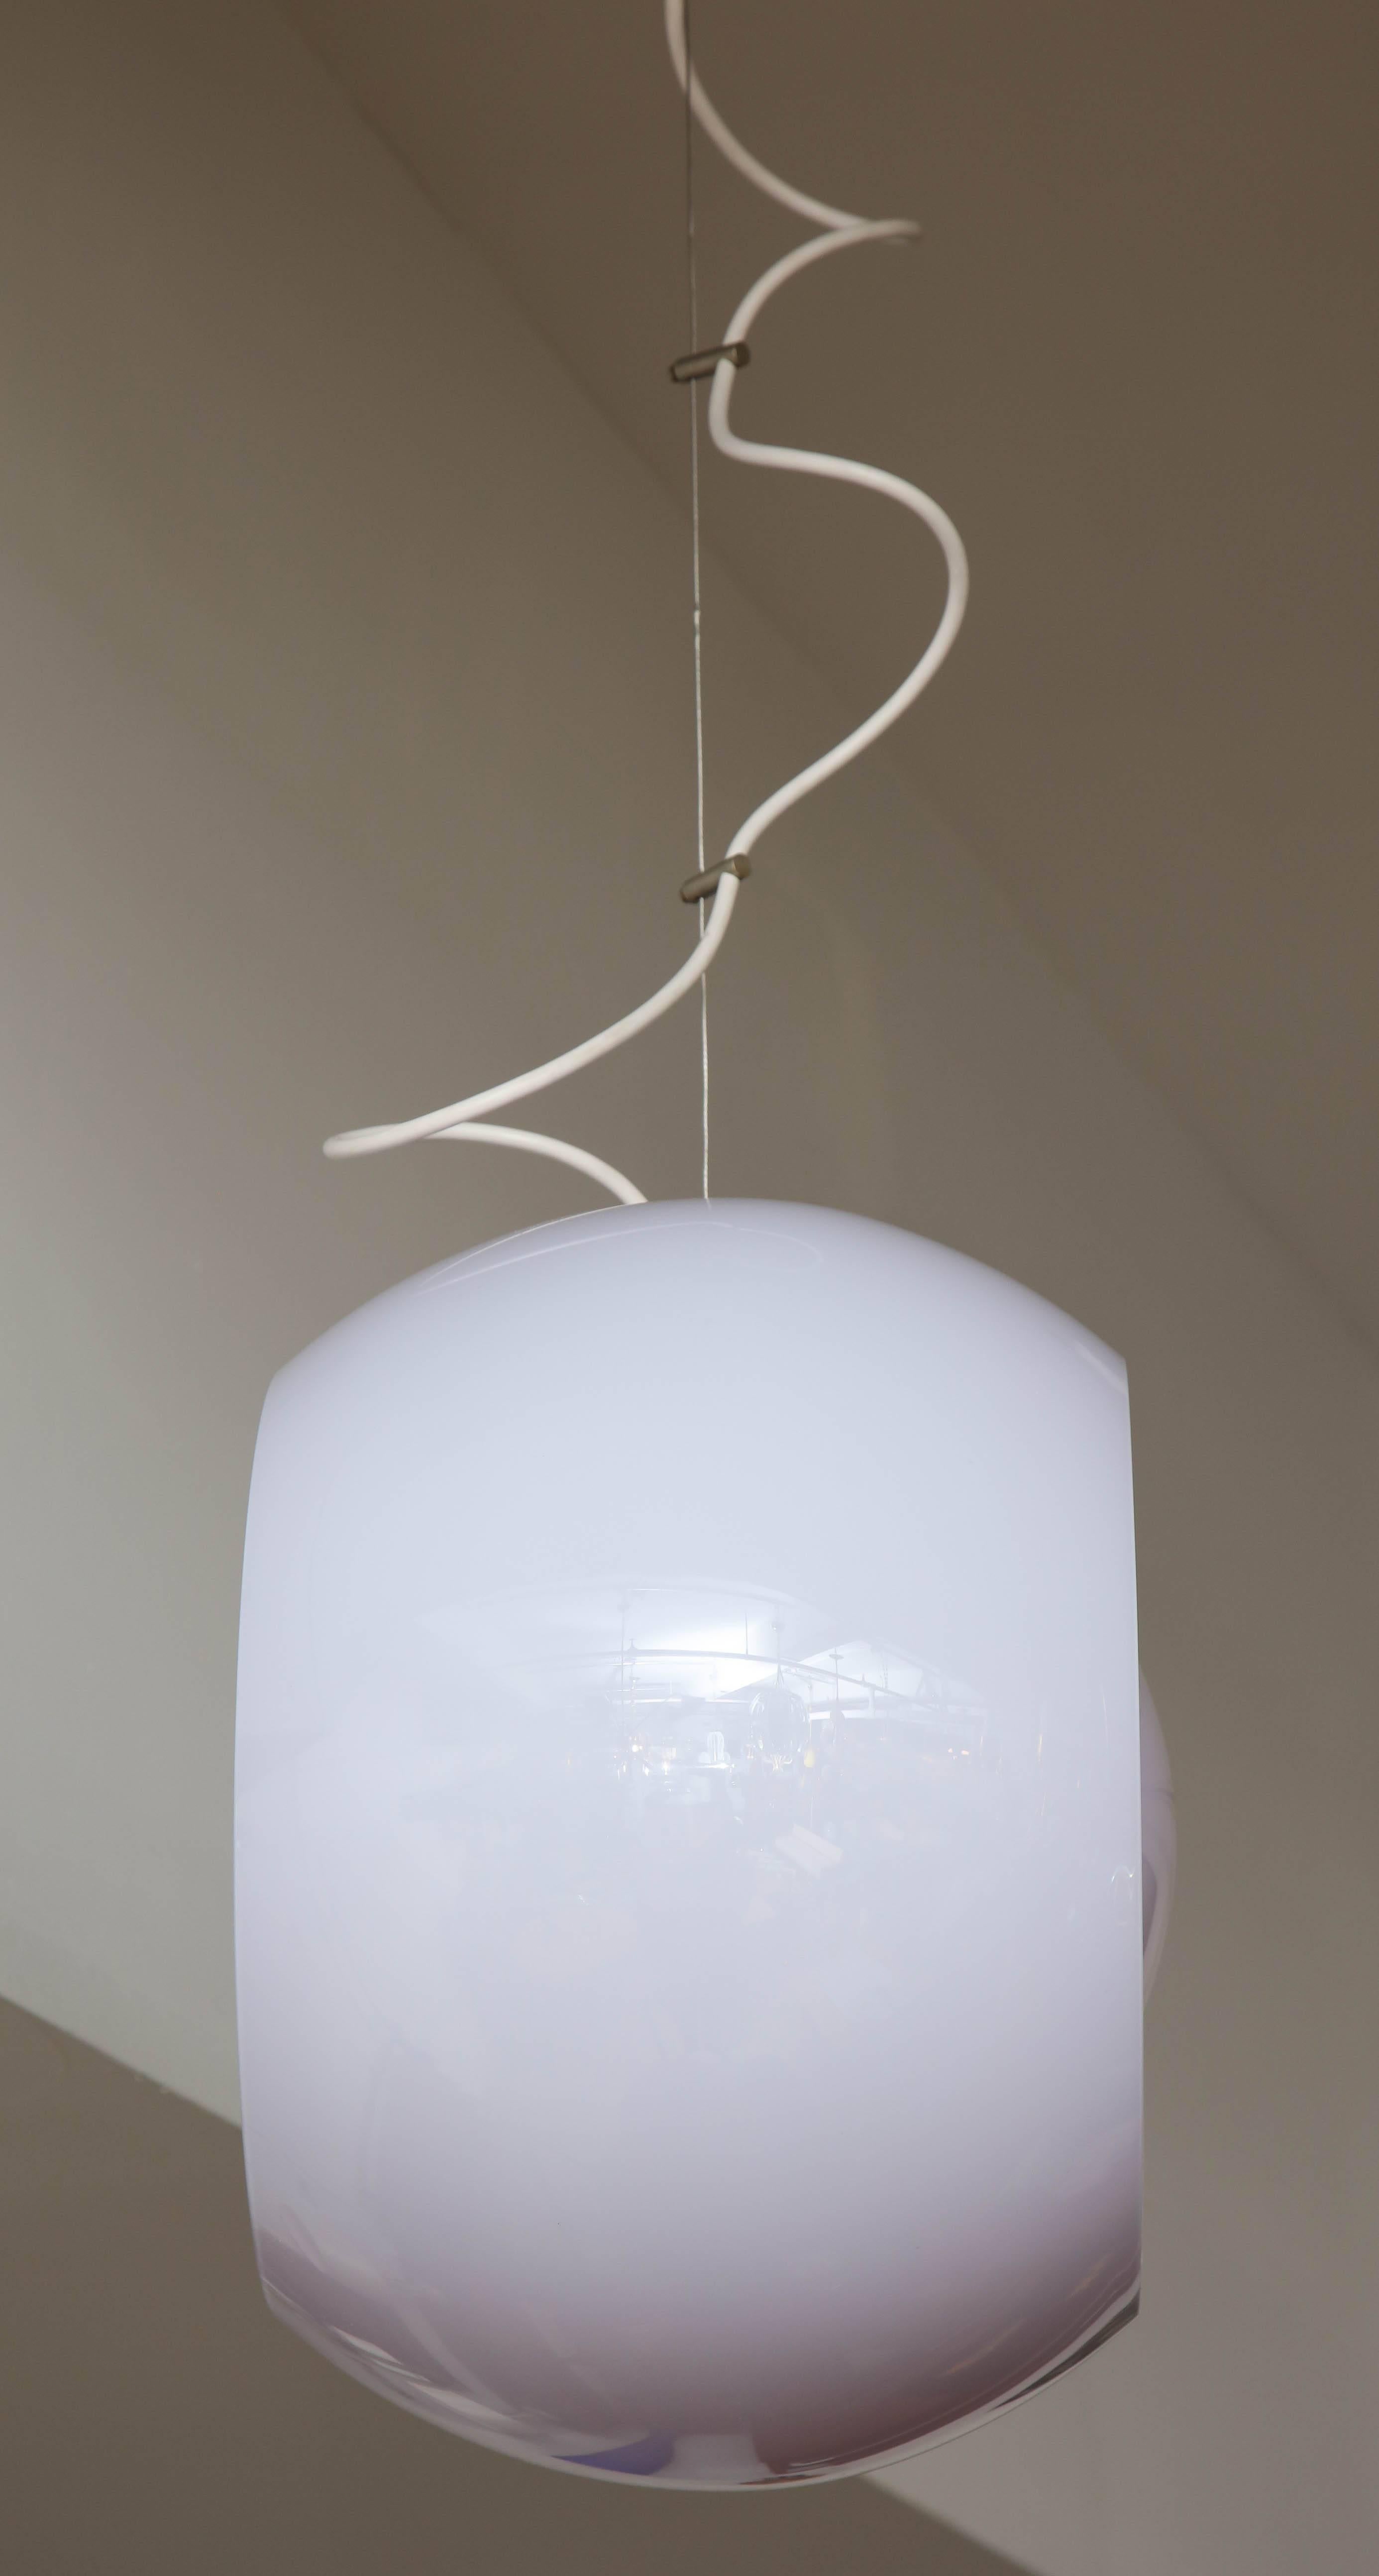 Italian Vistosi pendent light italian designed by Gino Vistosi For Sale